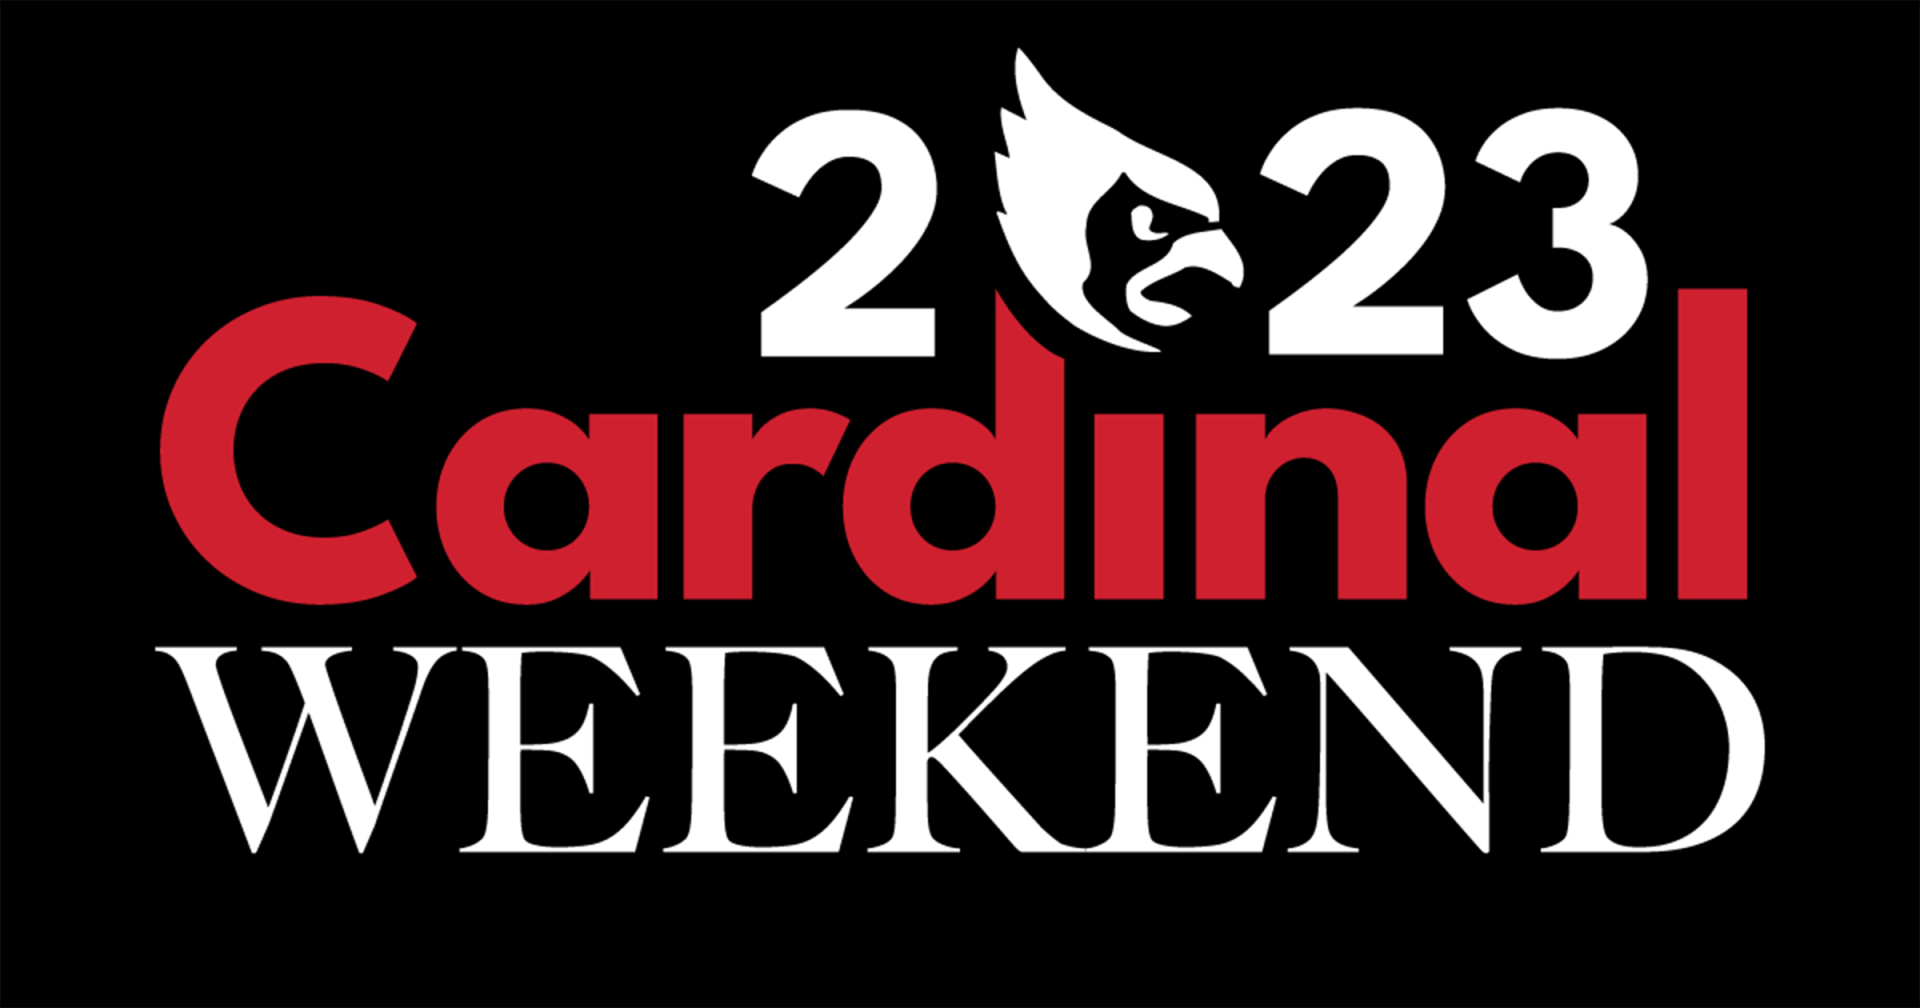 Cardinal Weekend 2023